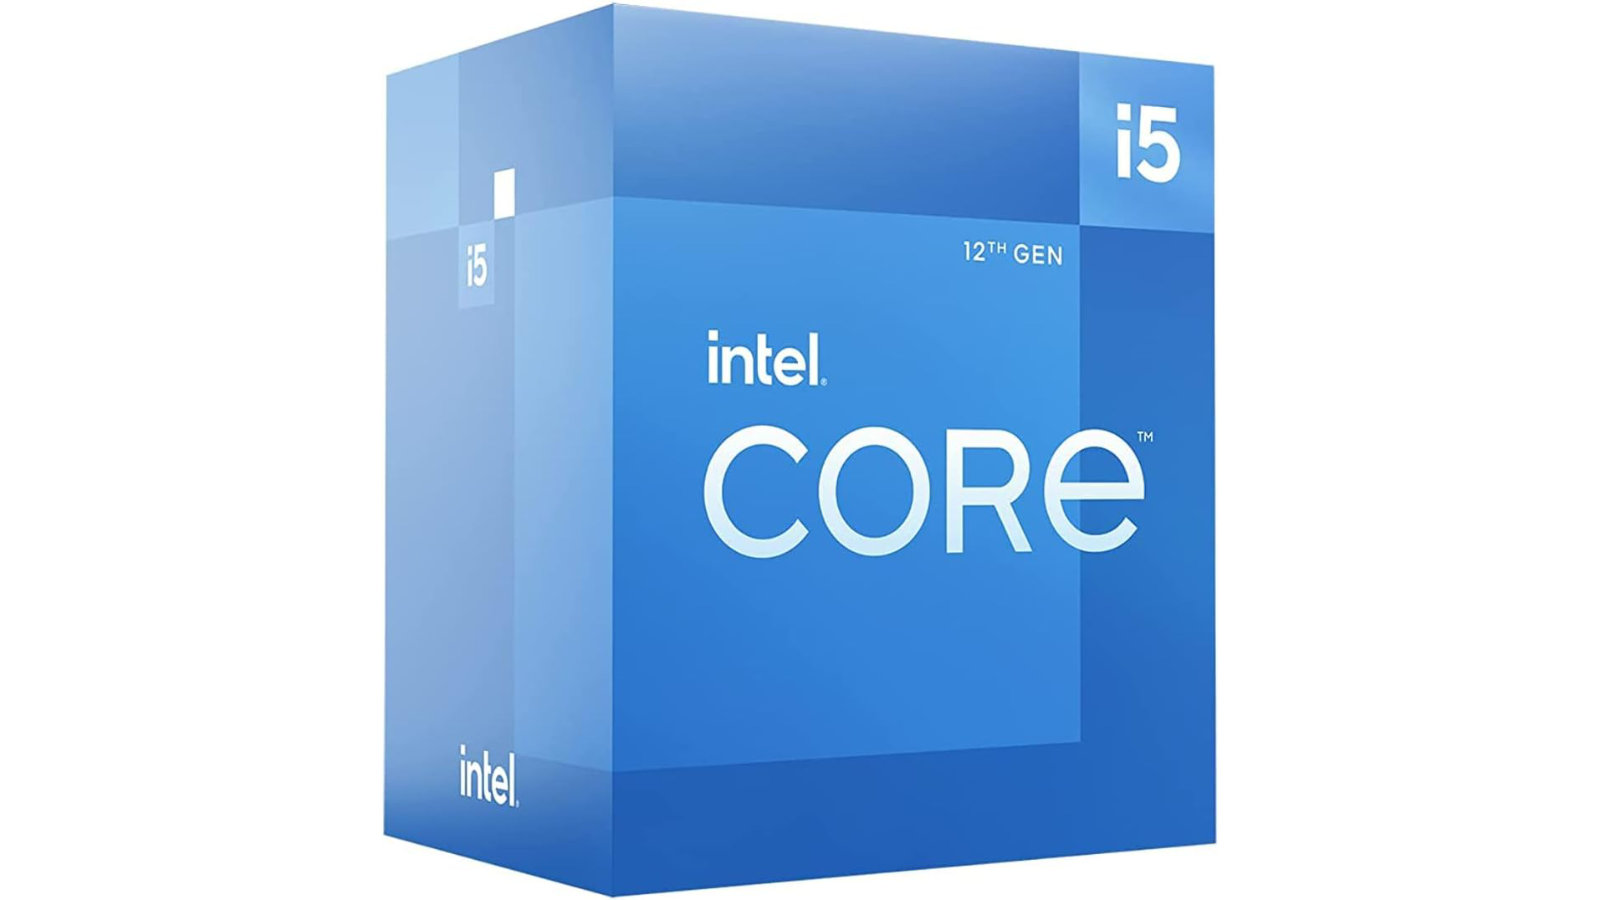 Intel Core i5-12400F retail box against a white background.